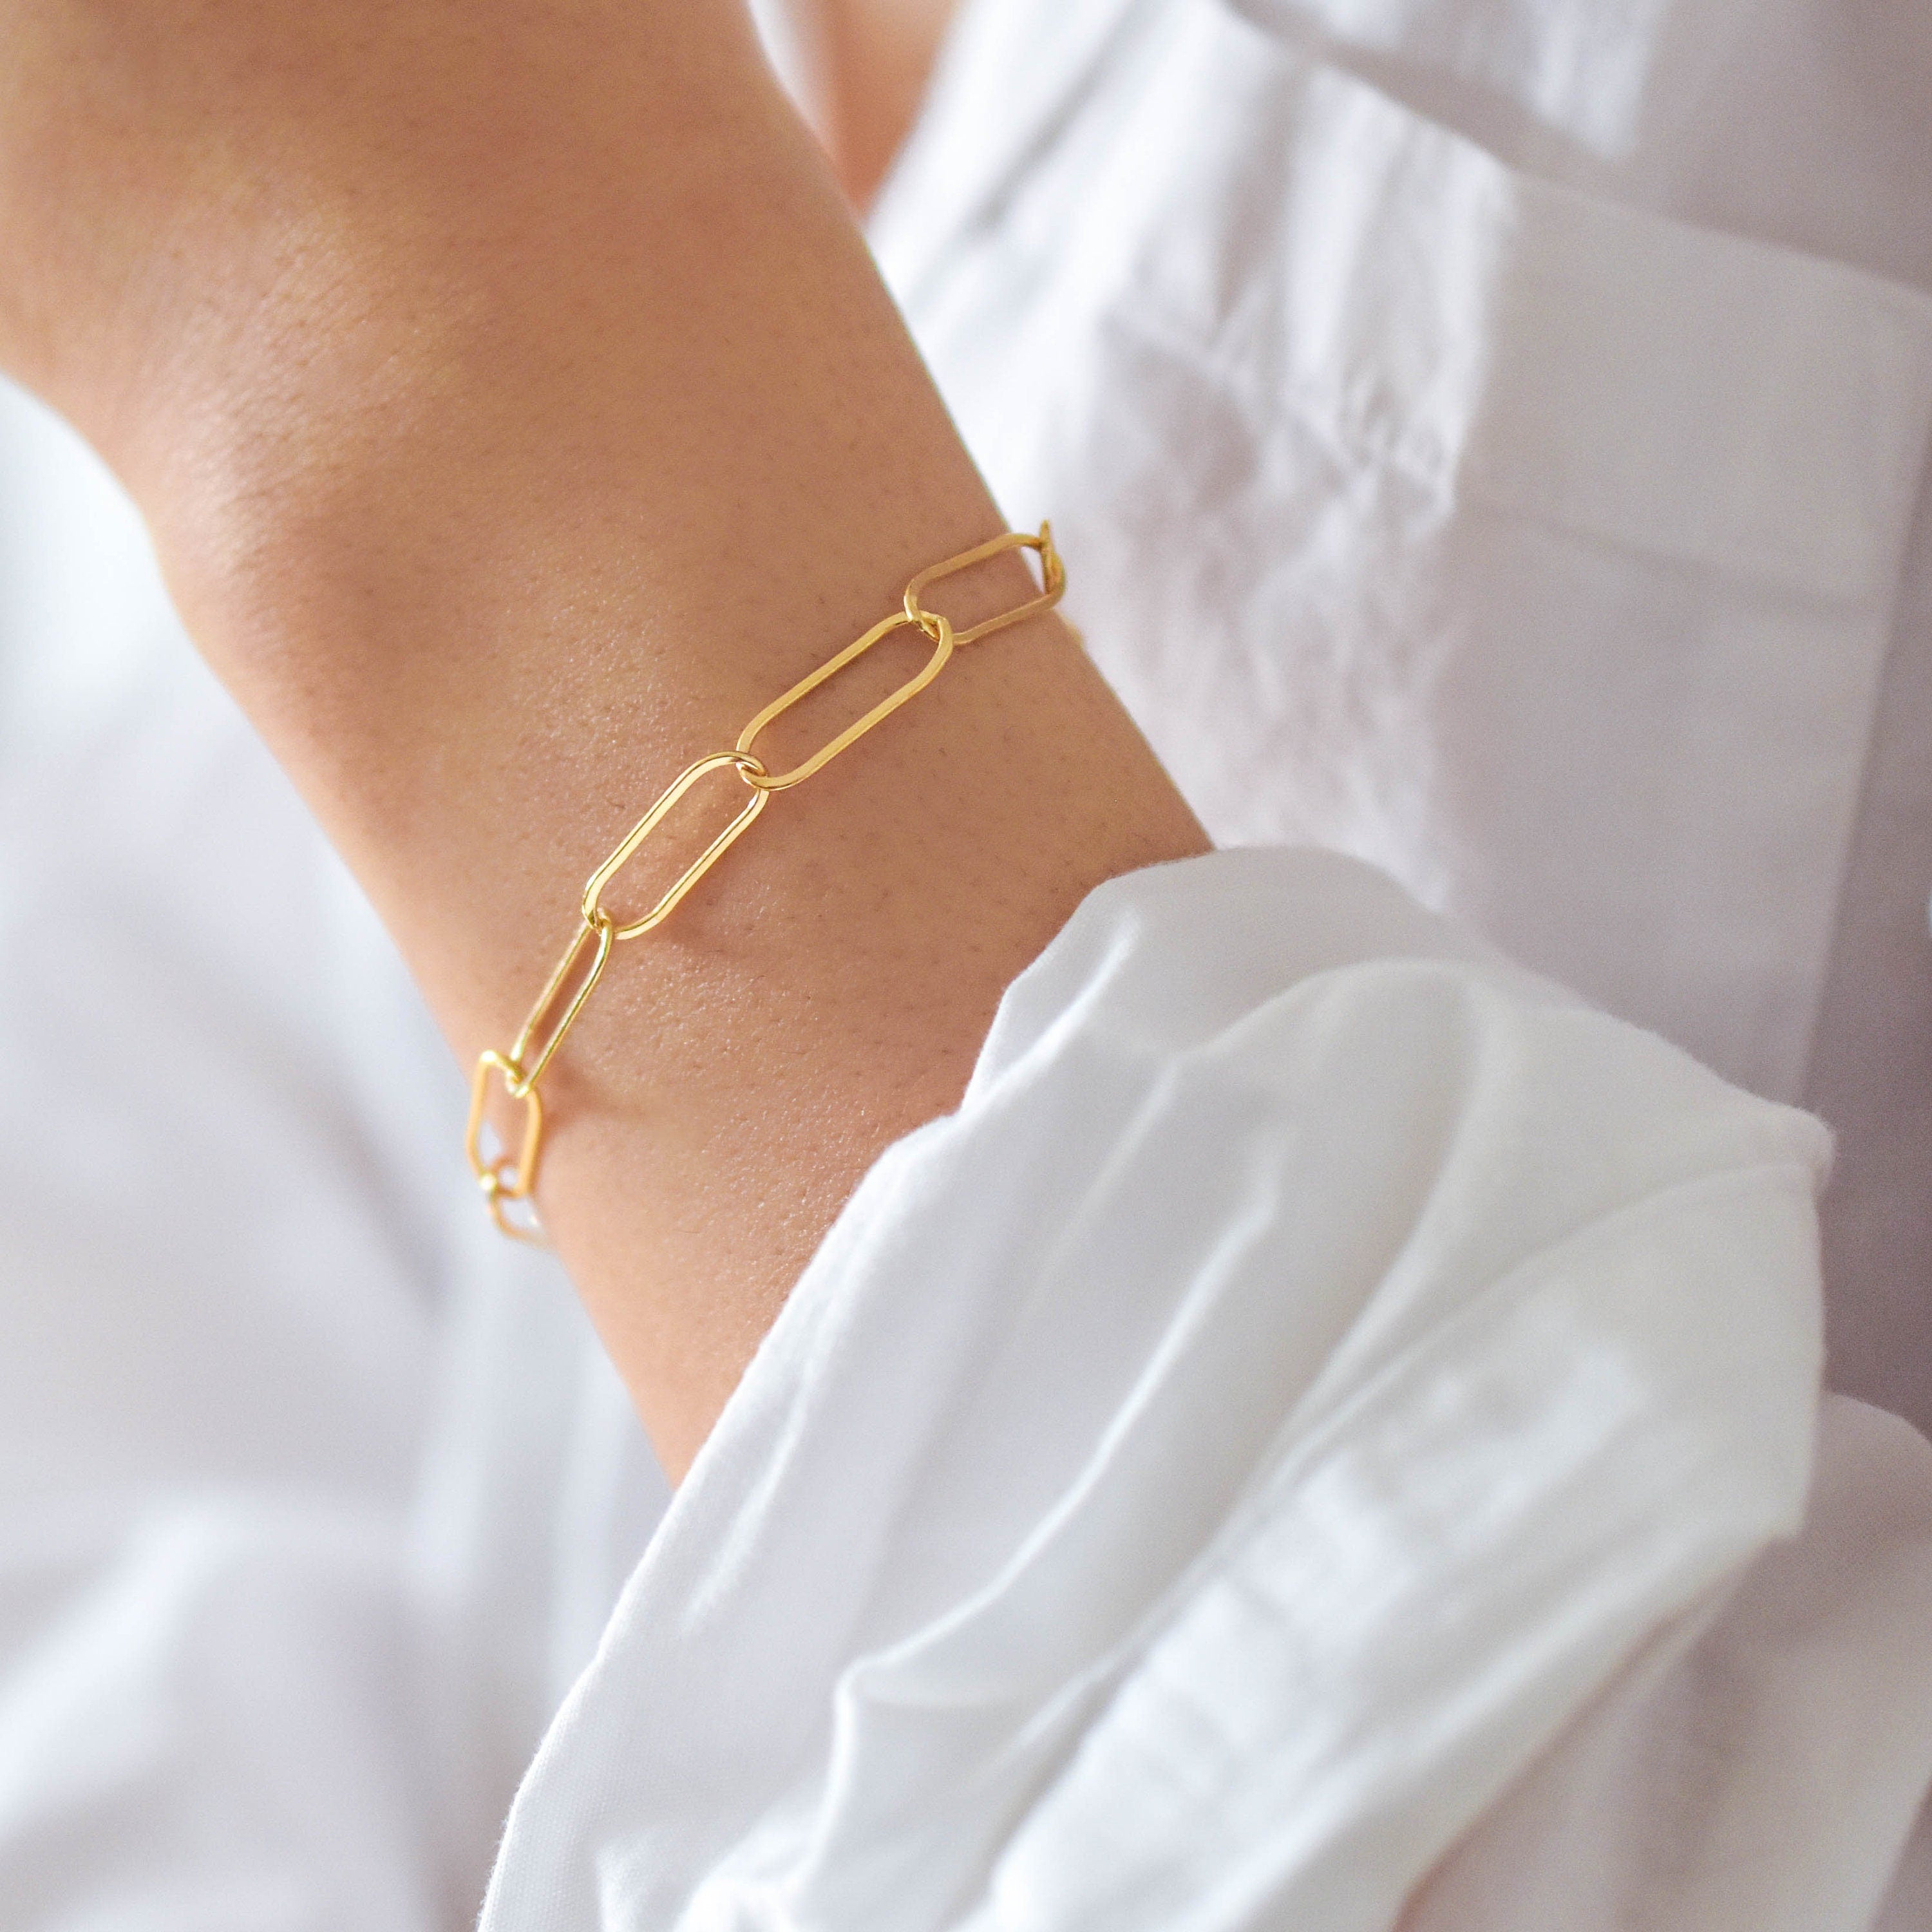 Paperclip Bracelet - gold filled paperclip bracelet, gold chain bracelet, link bracelet, simple bracelet, gold filled bracelet |GFB00004